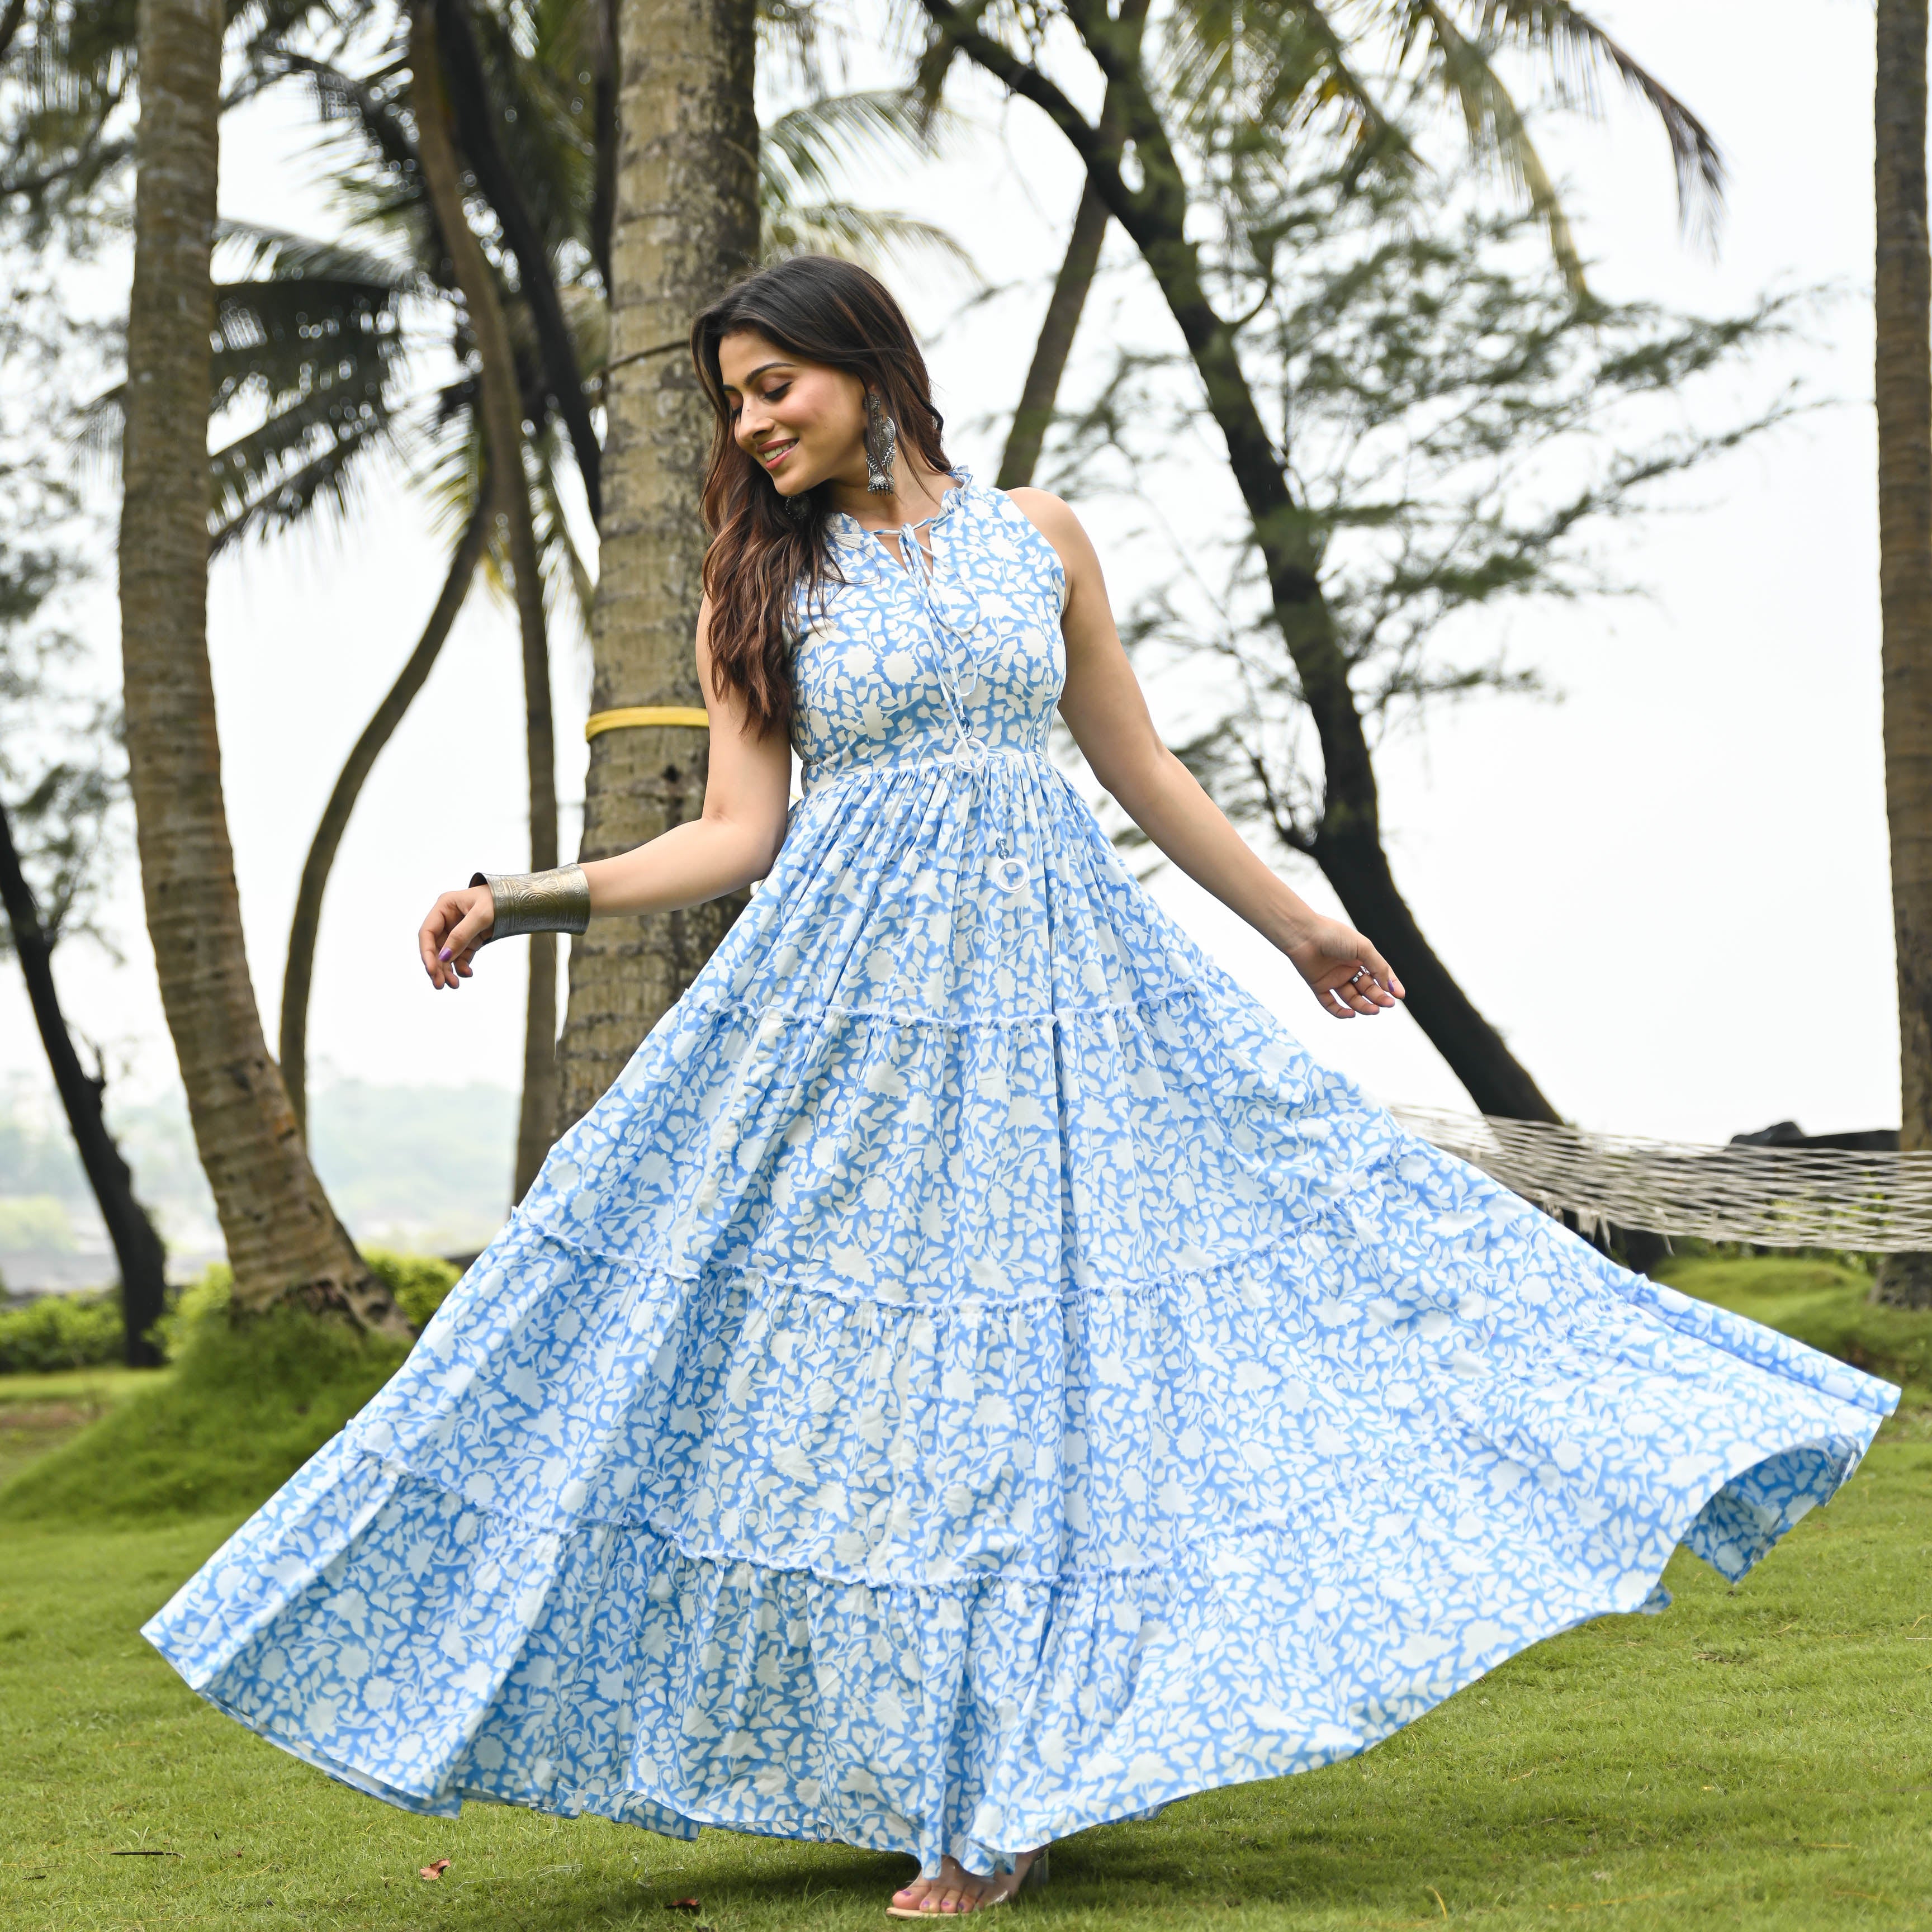 maxi dresses - Buy maxi dresses Online Starting at Just ₹200